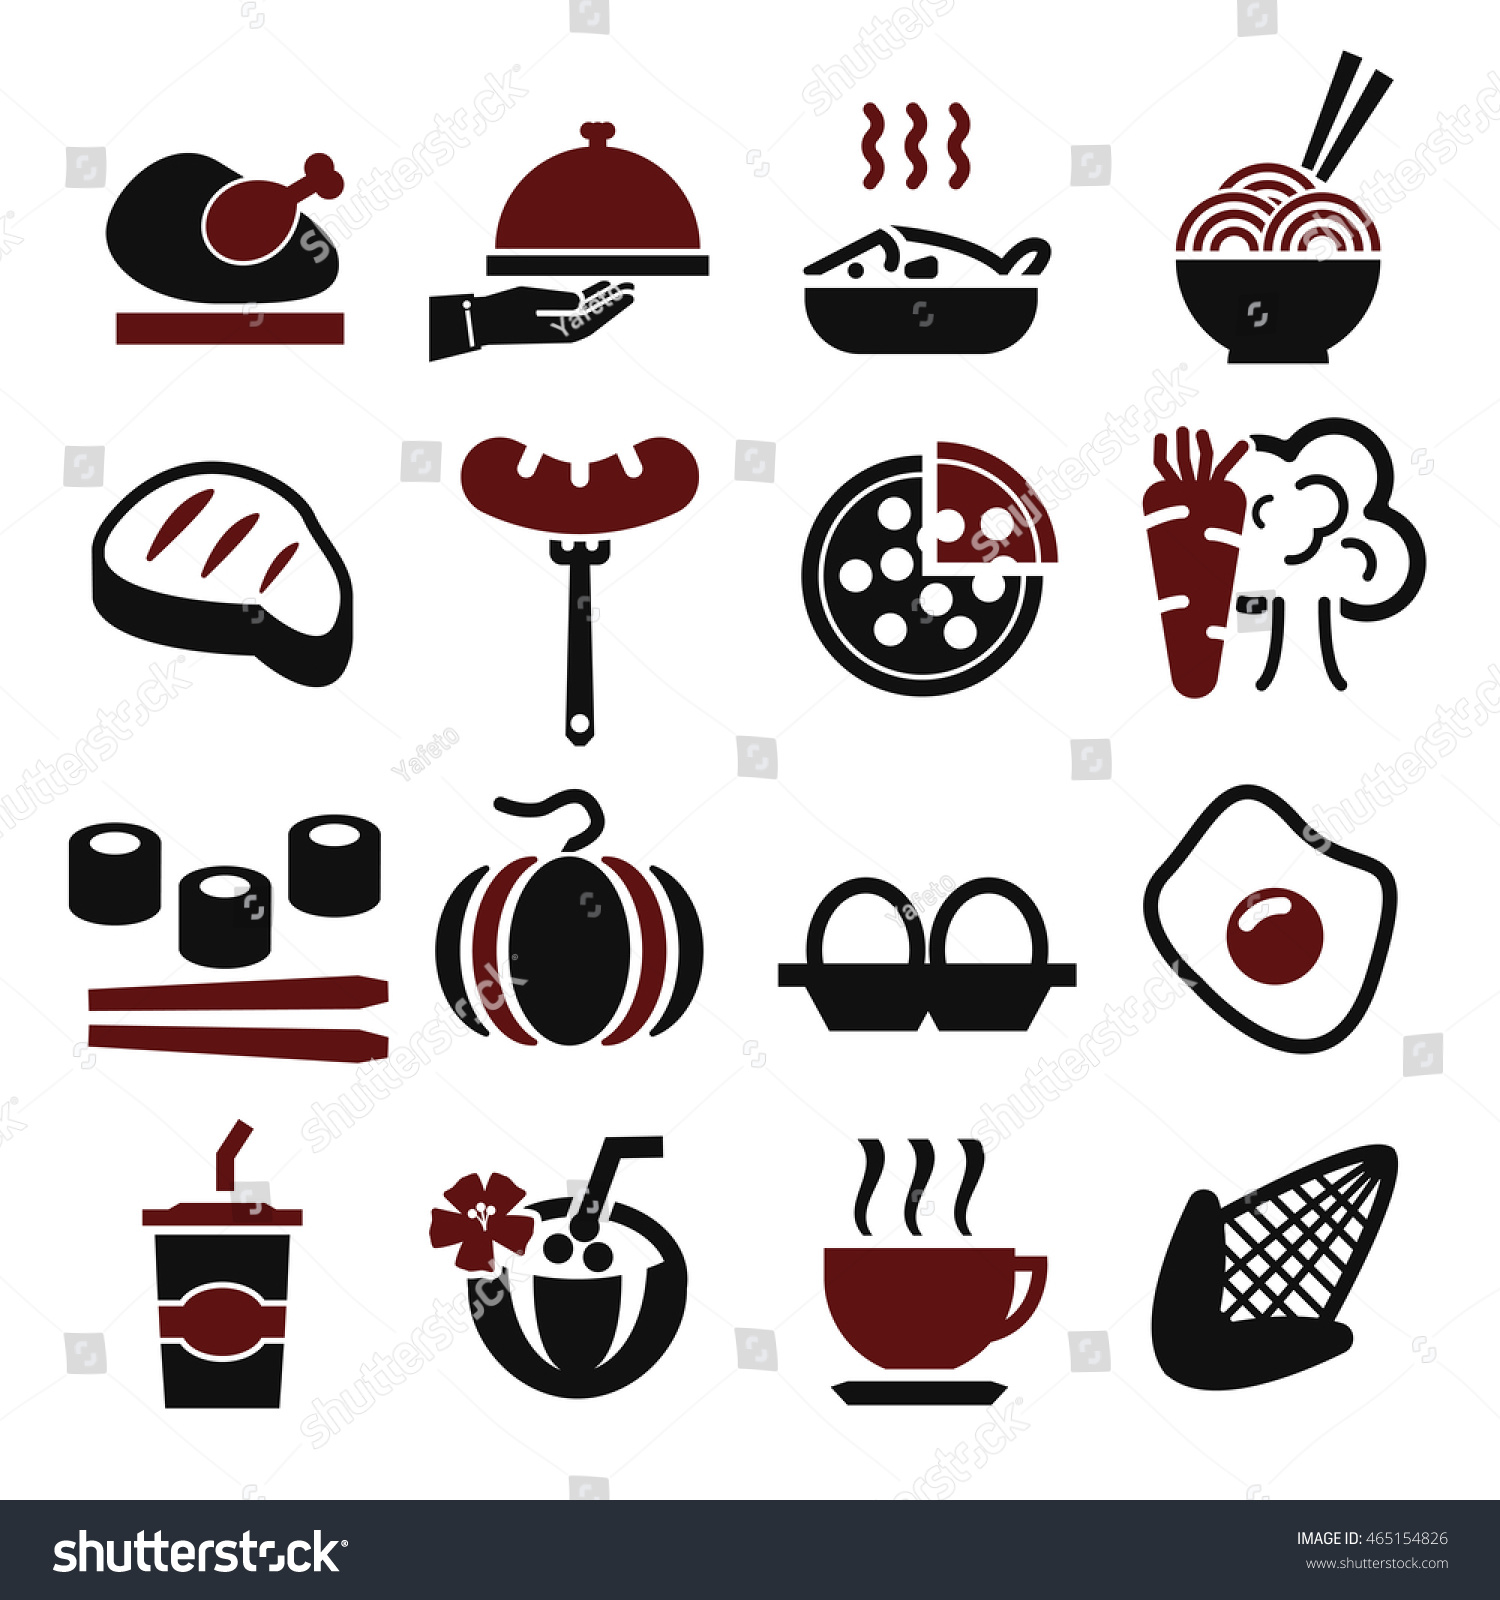 Food Icon Set Stock Vector Illustration 465154826 : Shutterstock